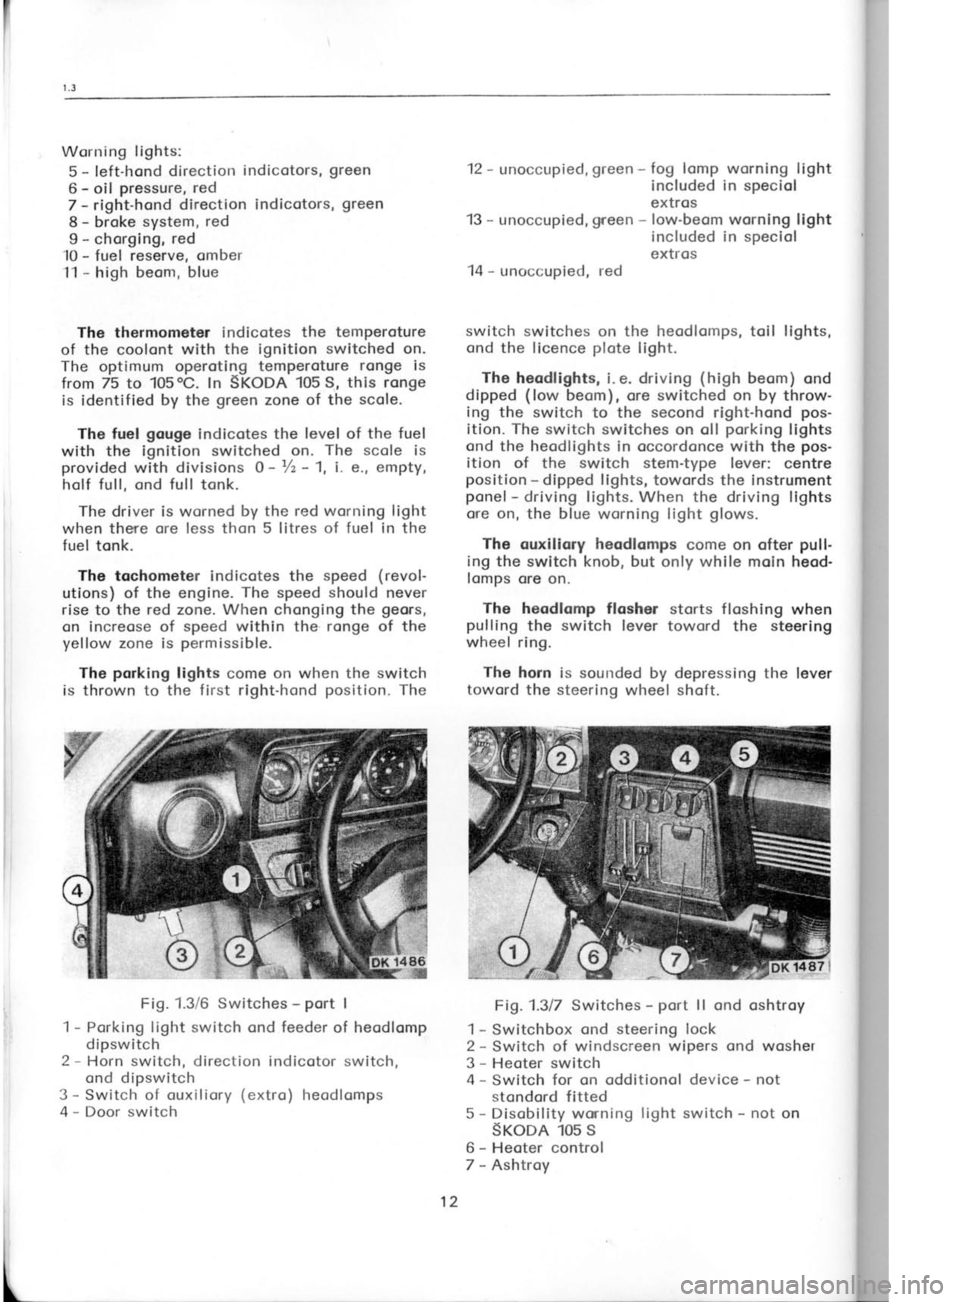 SKODA 120 LS 1980  Workshop Manual Worrring 
lights:
5  - 
left-hond  direction  indicotors,  green
6  - 
oil  pressure, 
red
7  - 
right-hond  direction indicotors,  green
8  - 
broke  system,  red
9  - 
chorging,  red
10  - 
fuel res